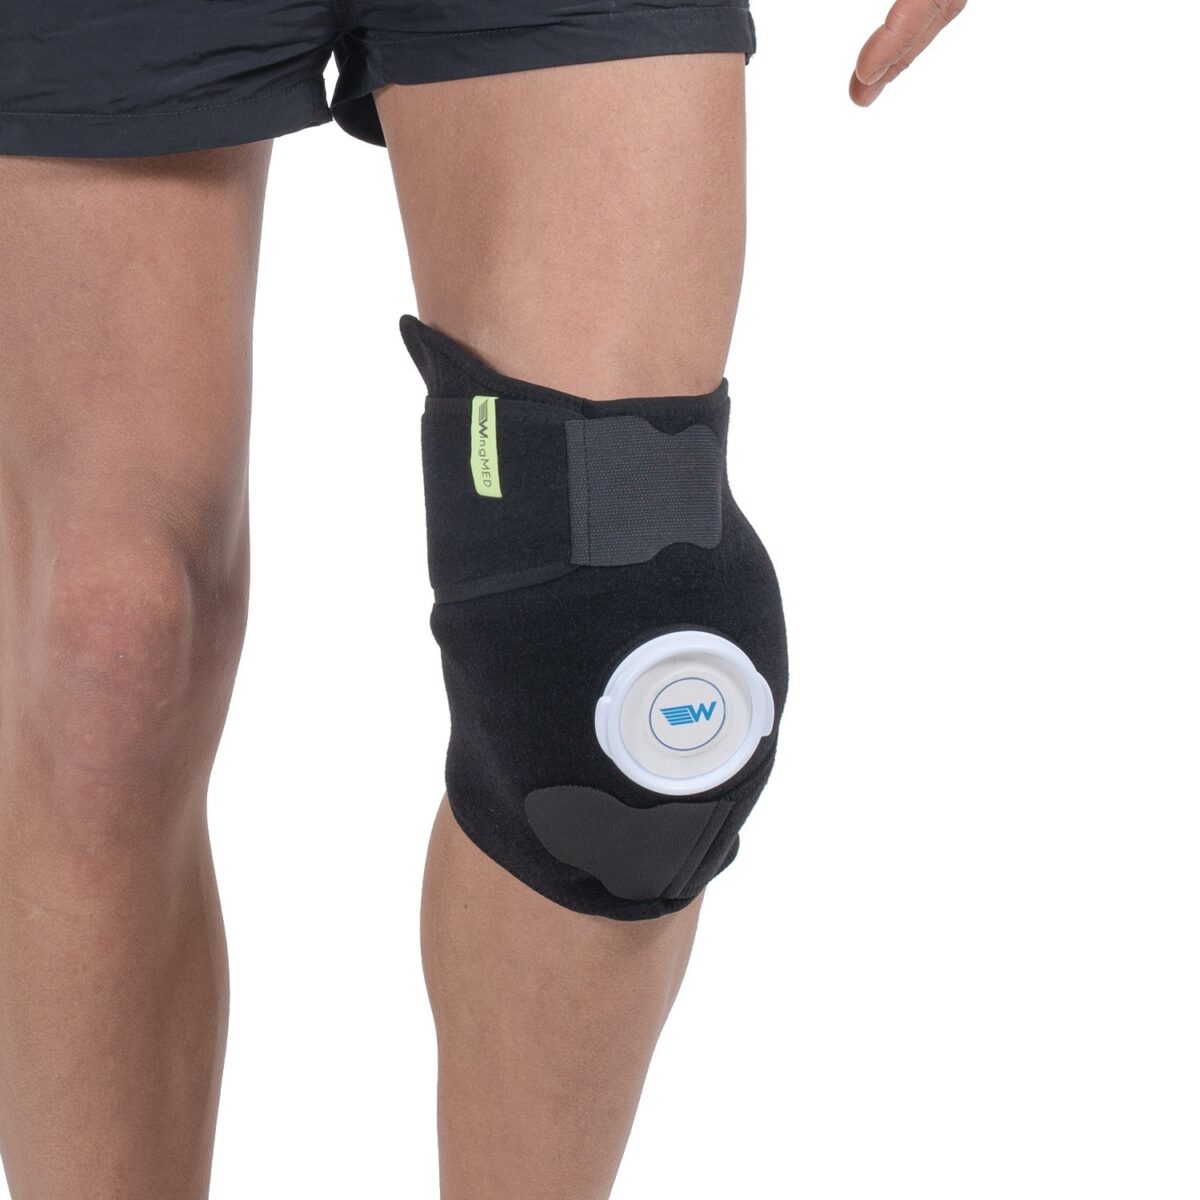 wingmed orthopedic equipments W538 ice bag knee support 40